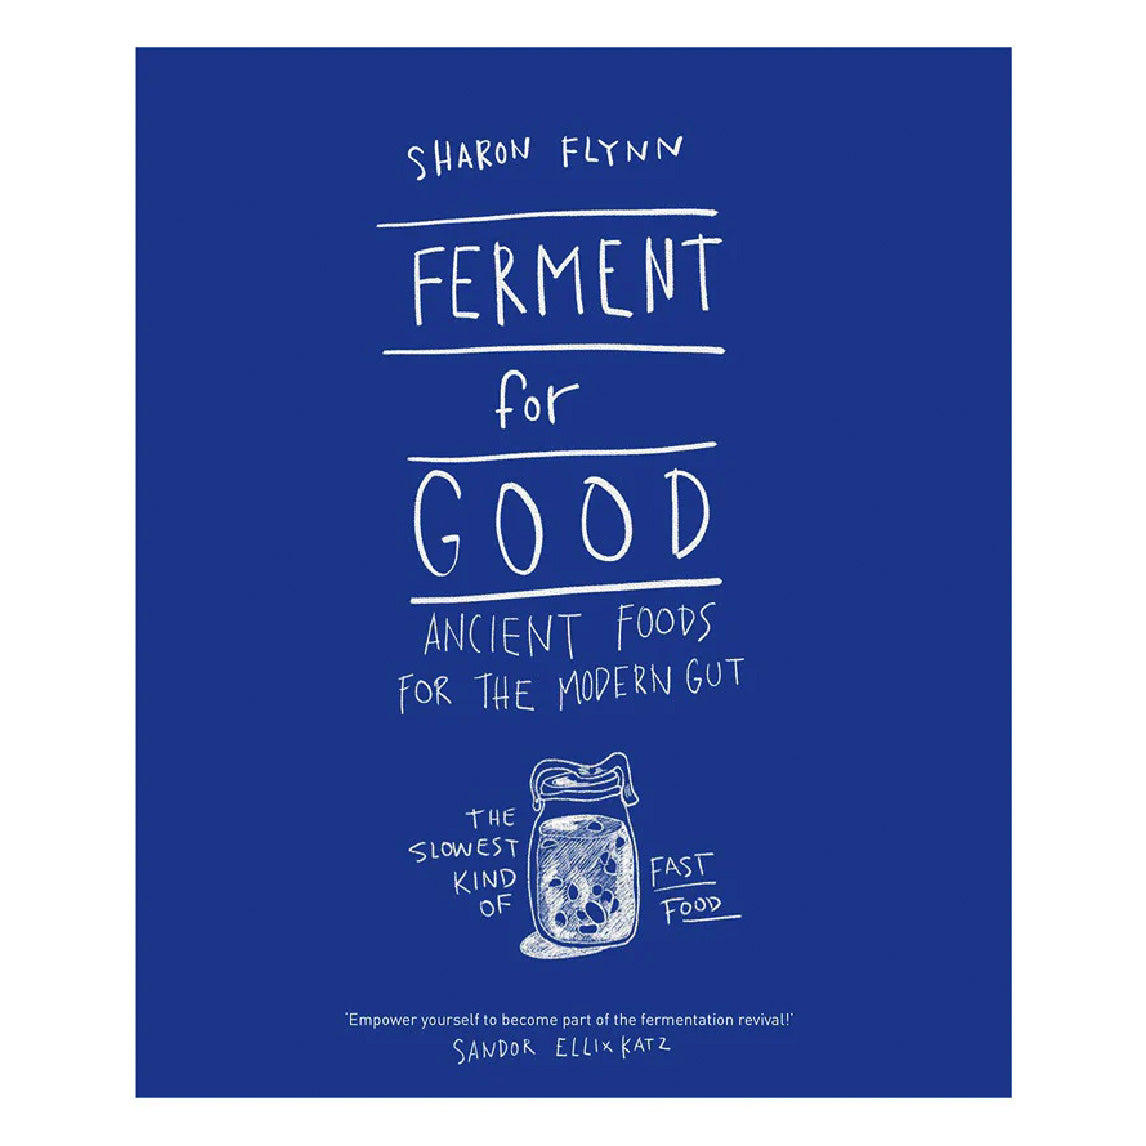 Ferment for Good by Sharon Flynn